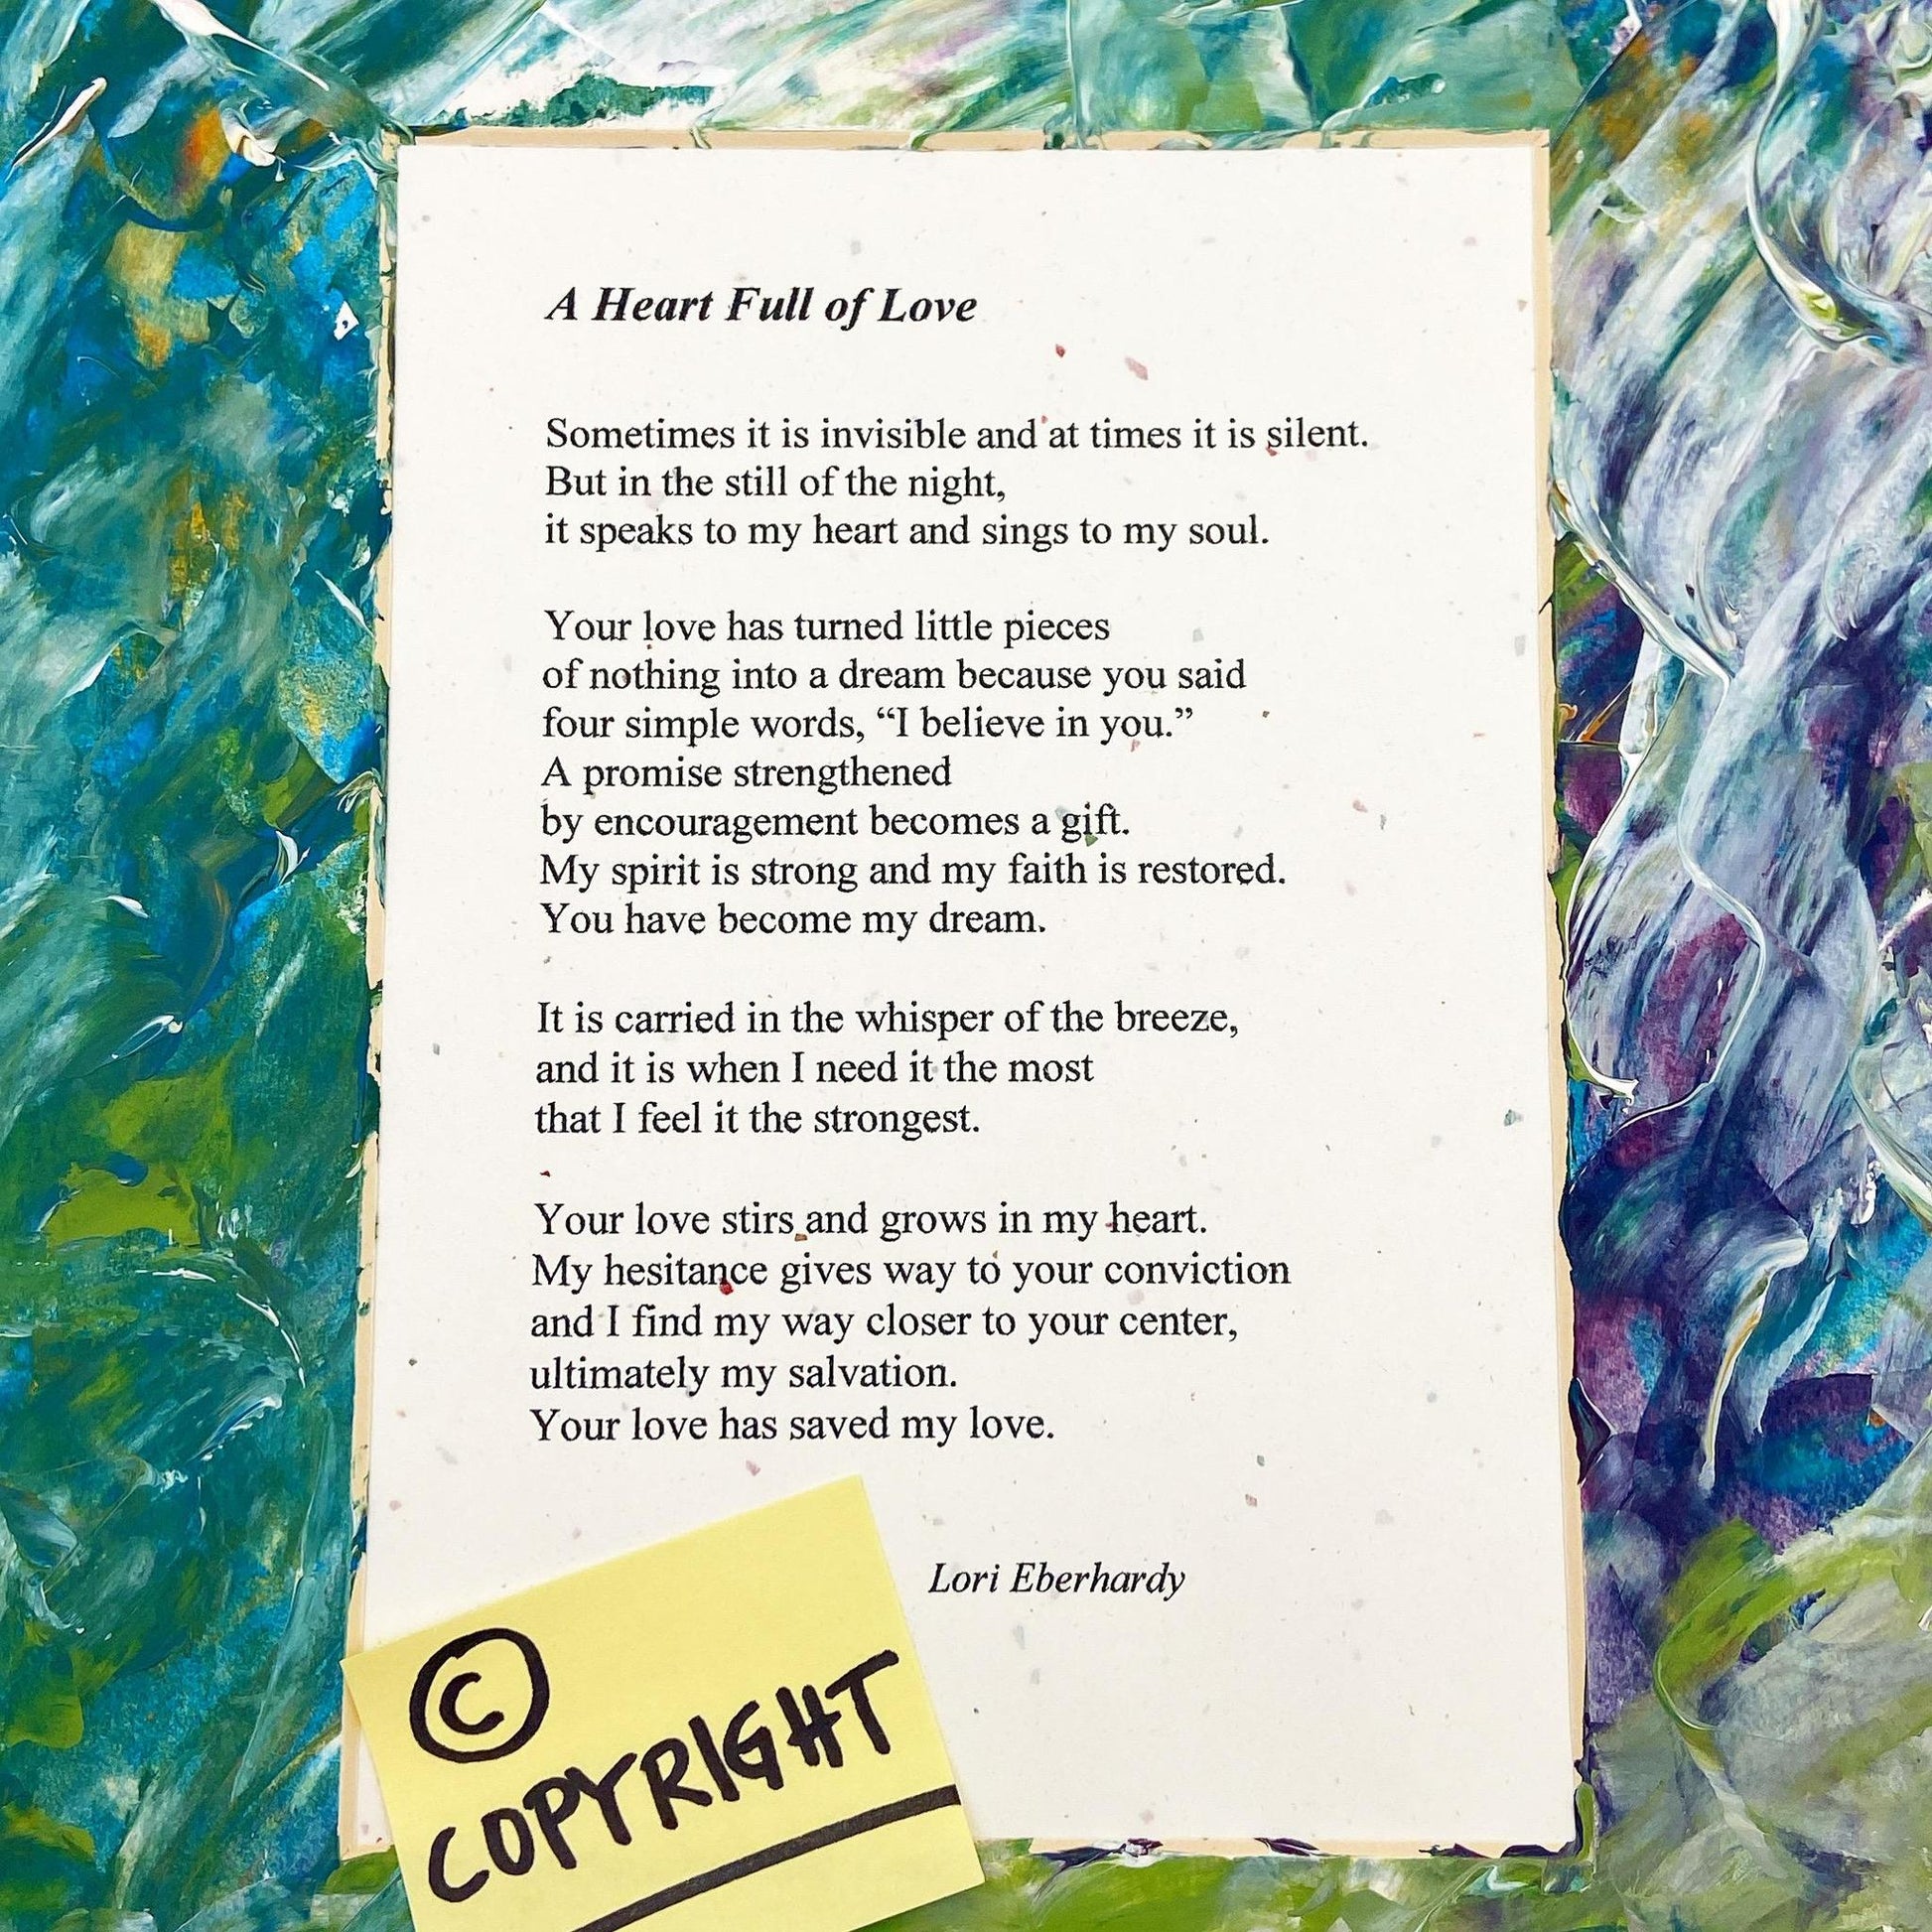 Inspiring Love Print Human Heart Print Love Poem Art 